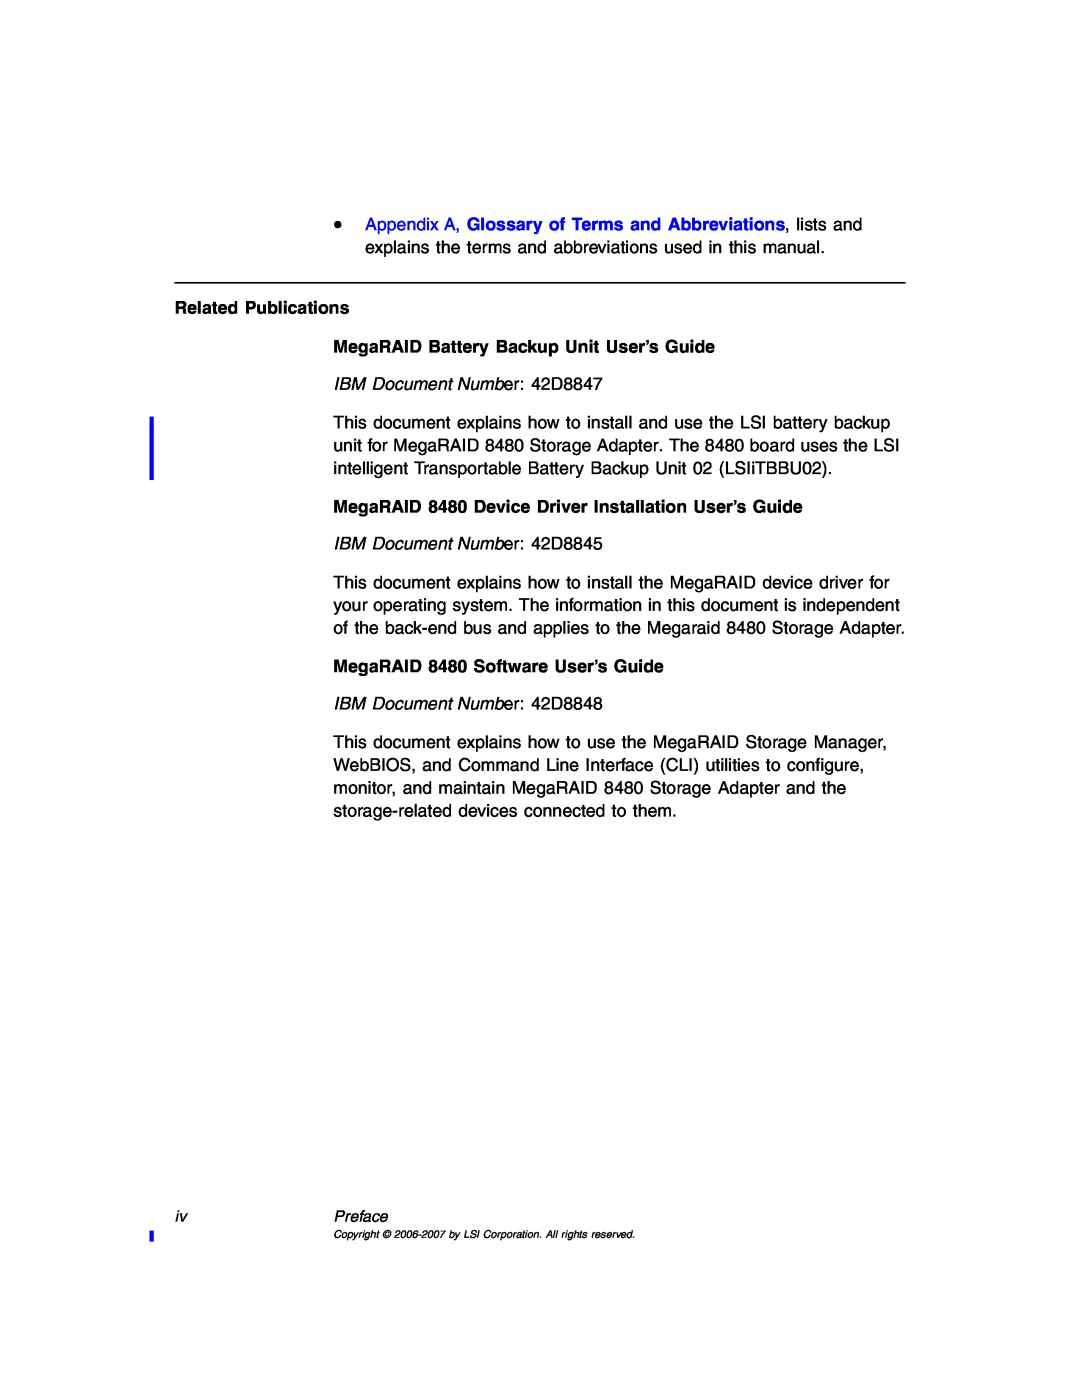 IBM MegaRAID 8480 manual Related Publications MegaRAID Battery Backup Unit User’s Guide, IBM Document Number 42D8847 